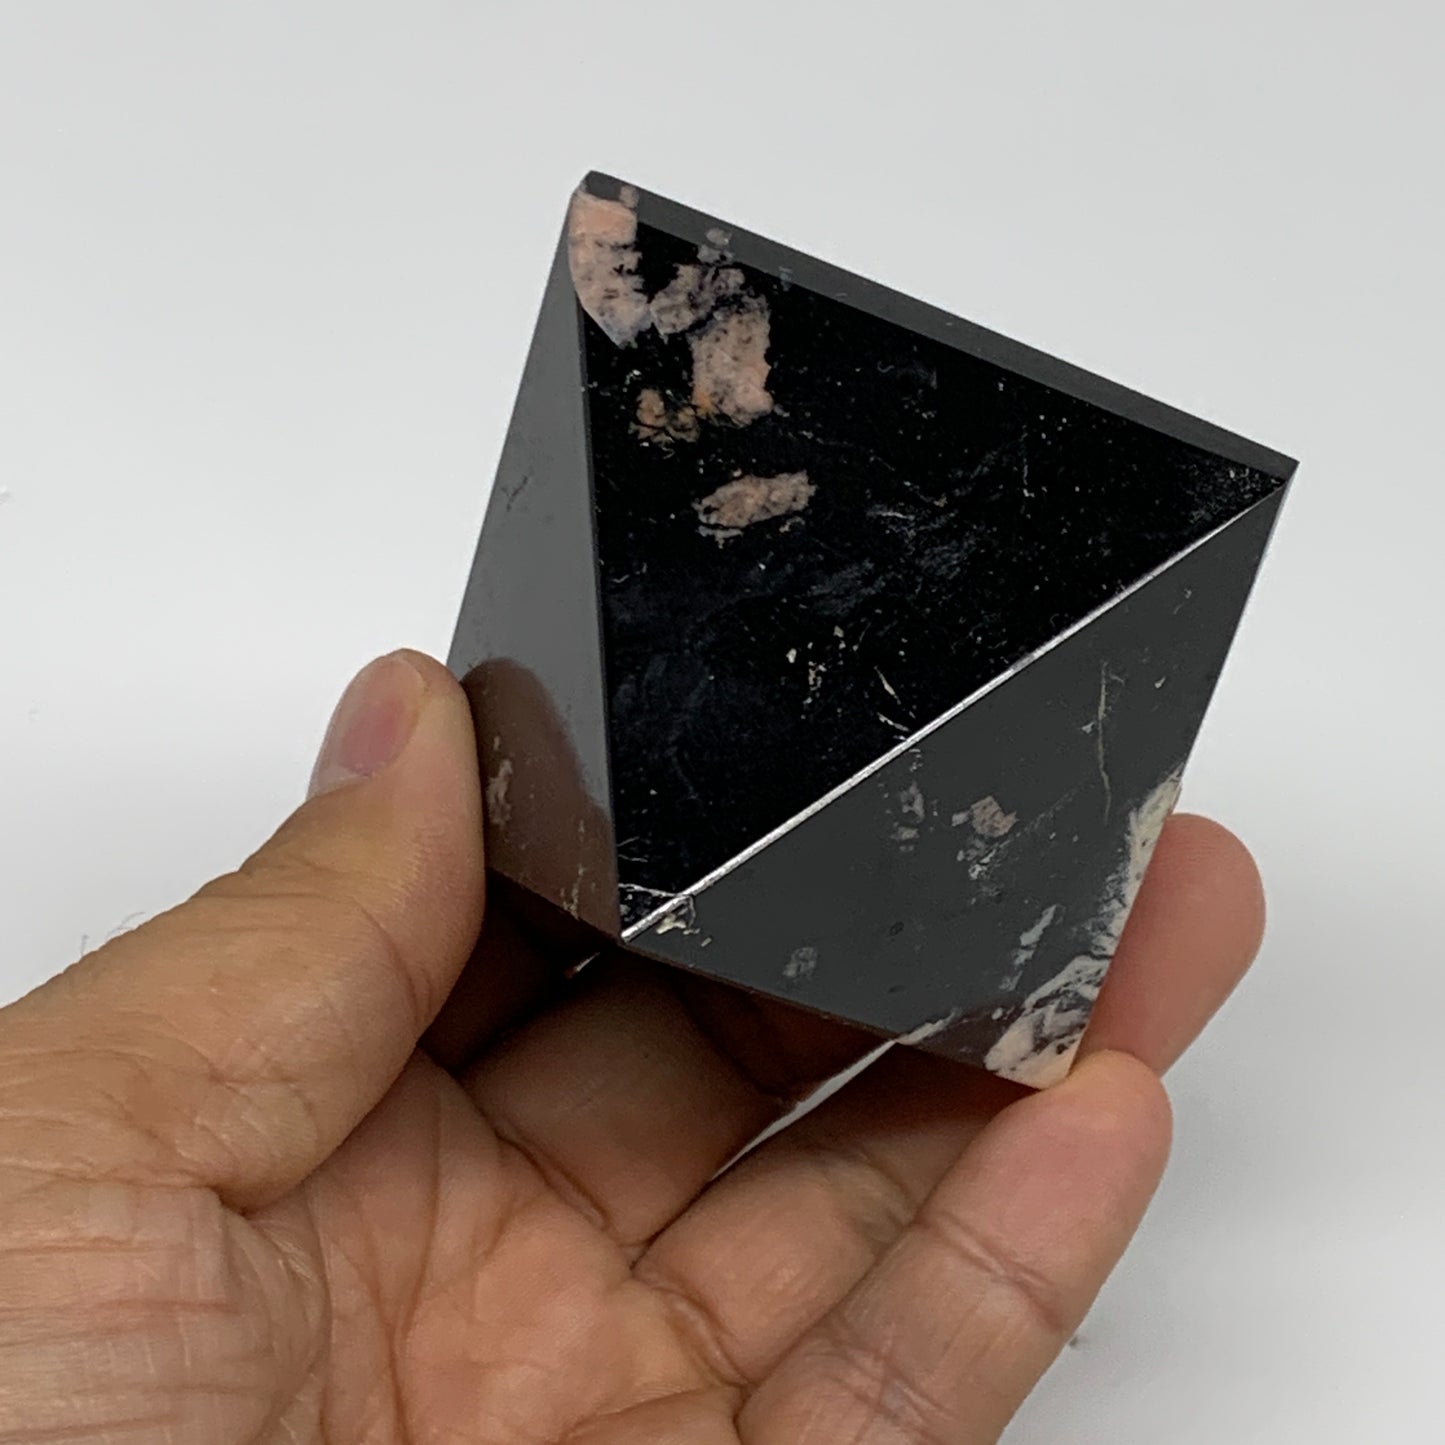 198.4g, 1.9"x2.2"x2.2", Black Tourmaline Pyramid Gemstone,Healing Crystal,B30194